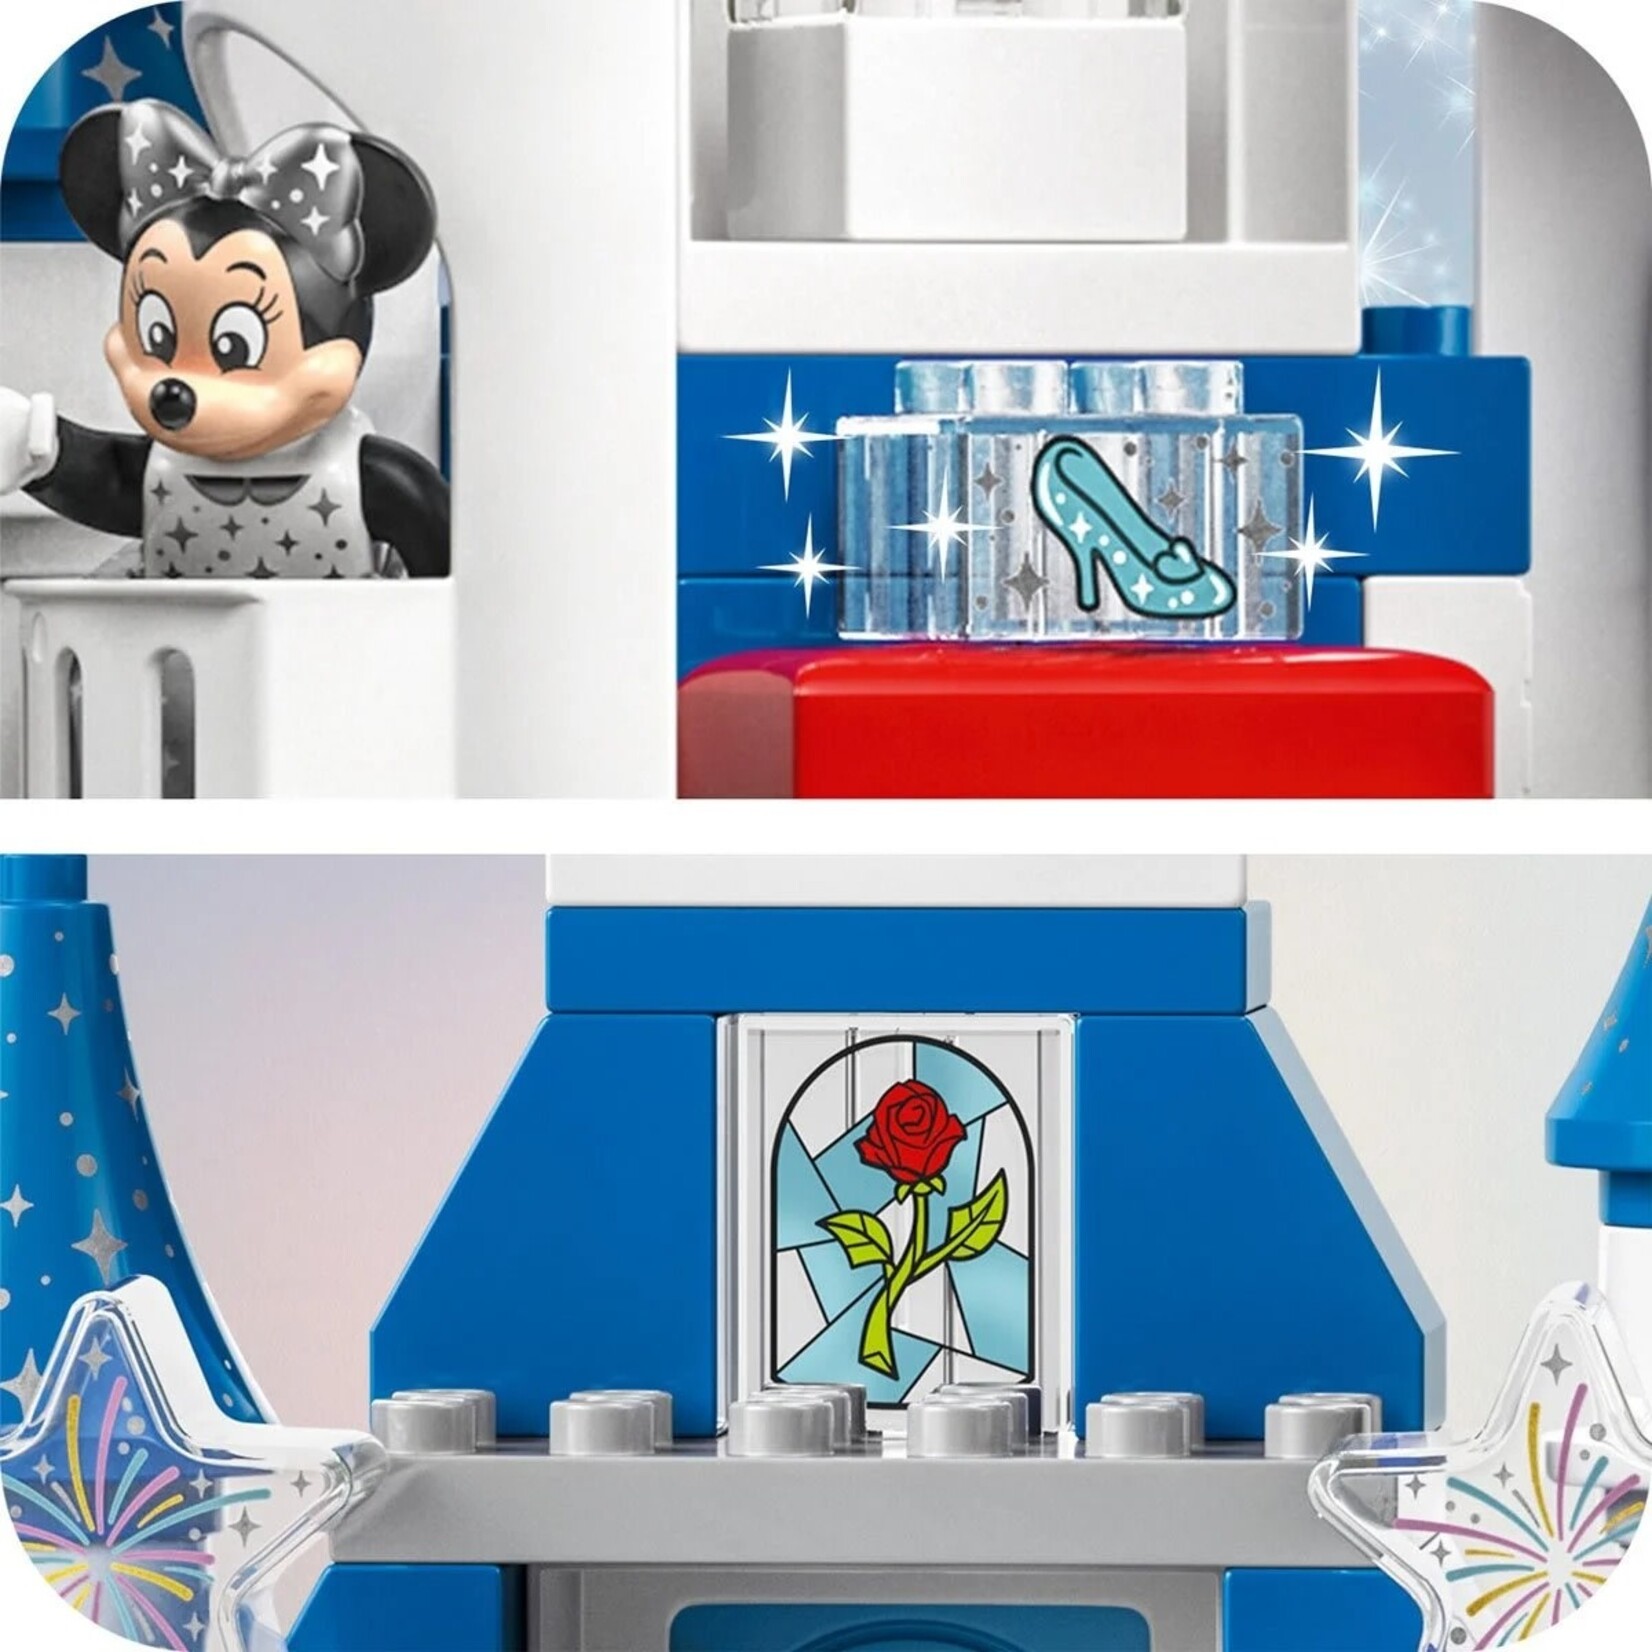 LEGO LEGO DUPLO Disney 100 3-in-1 Magical Castle 10998